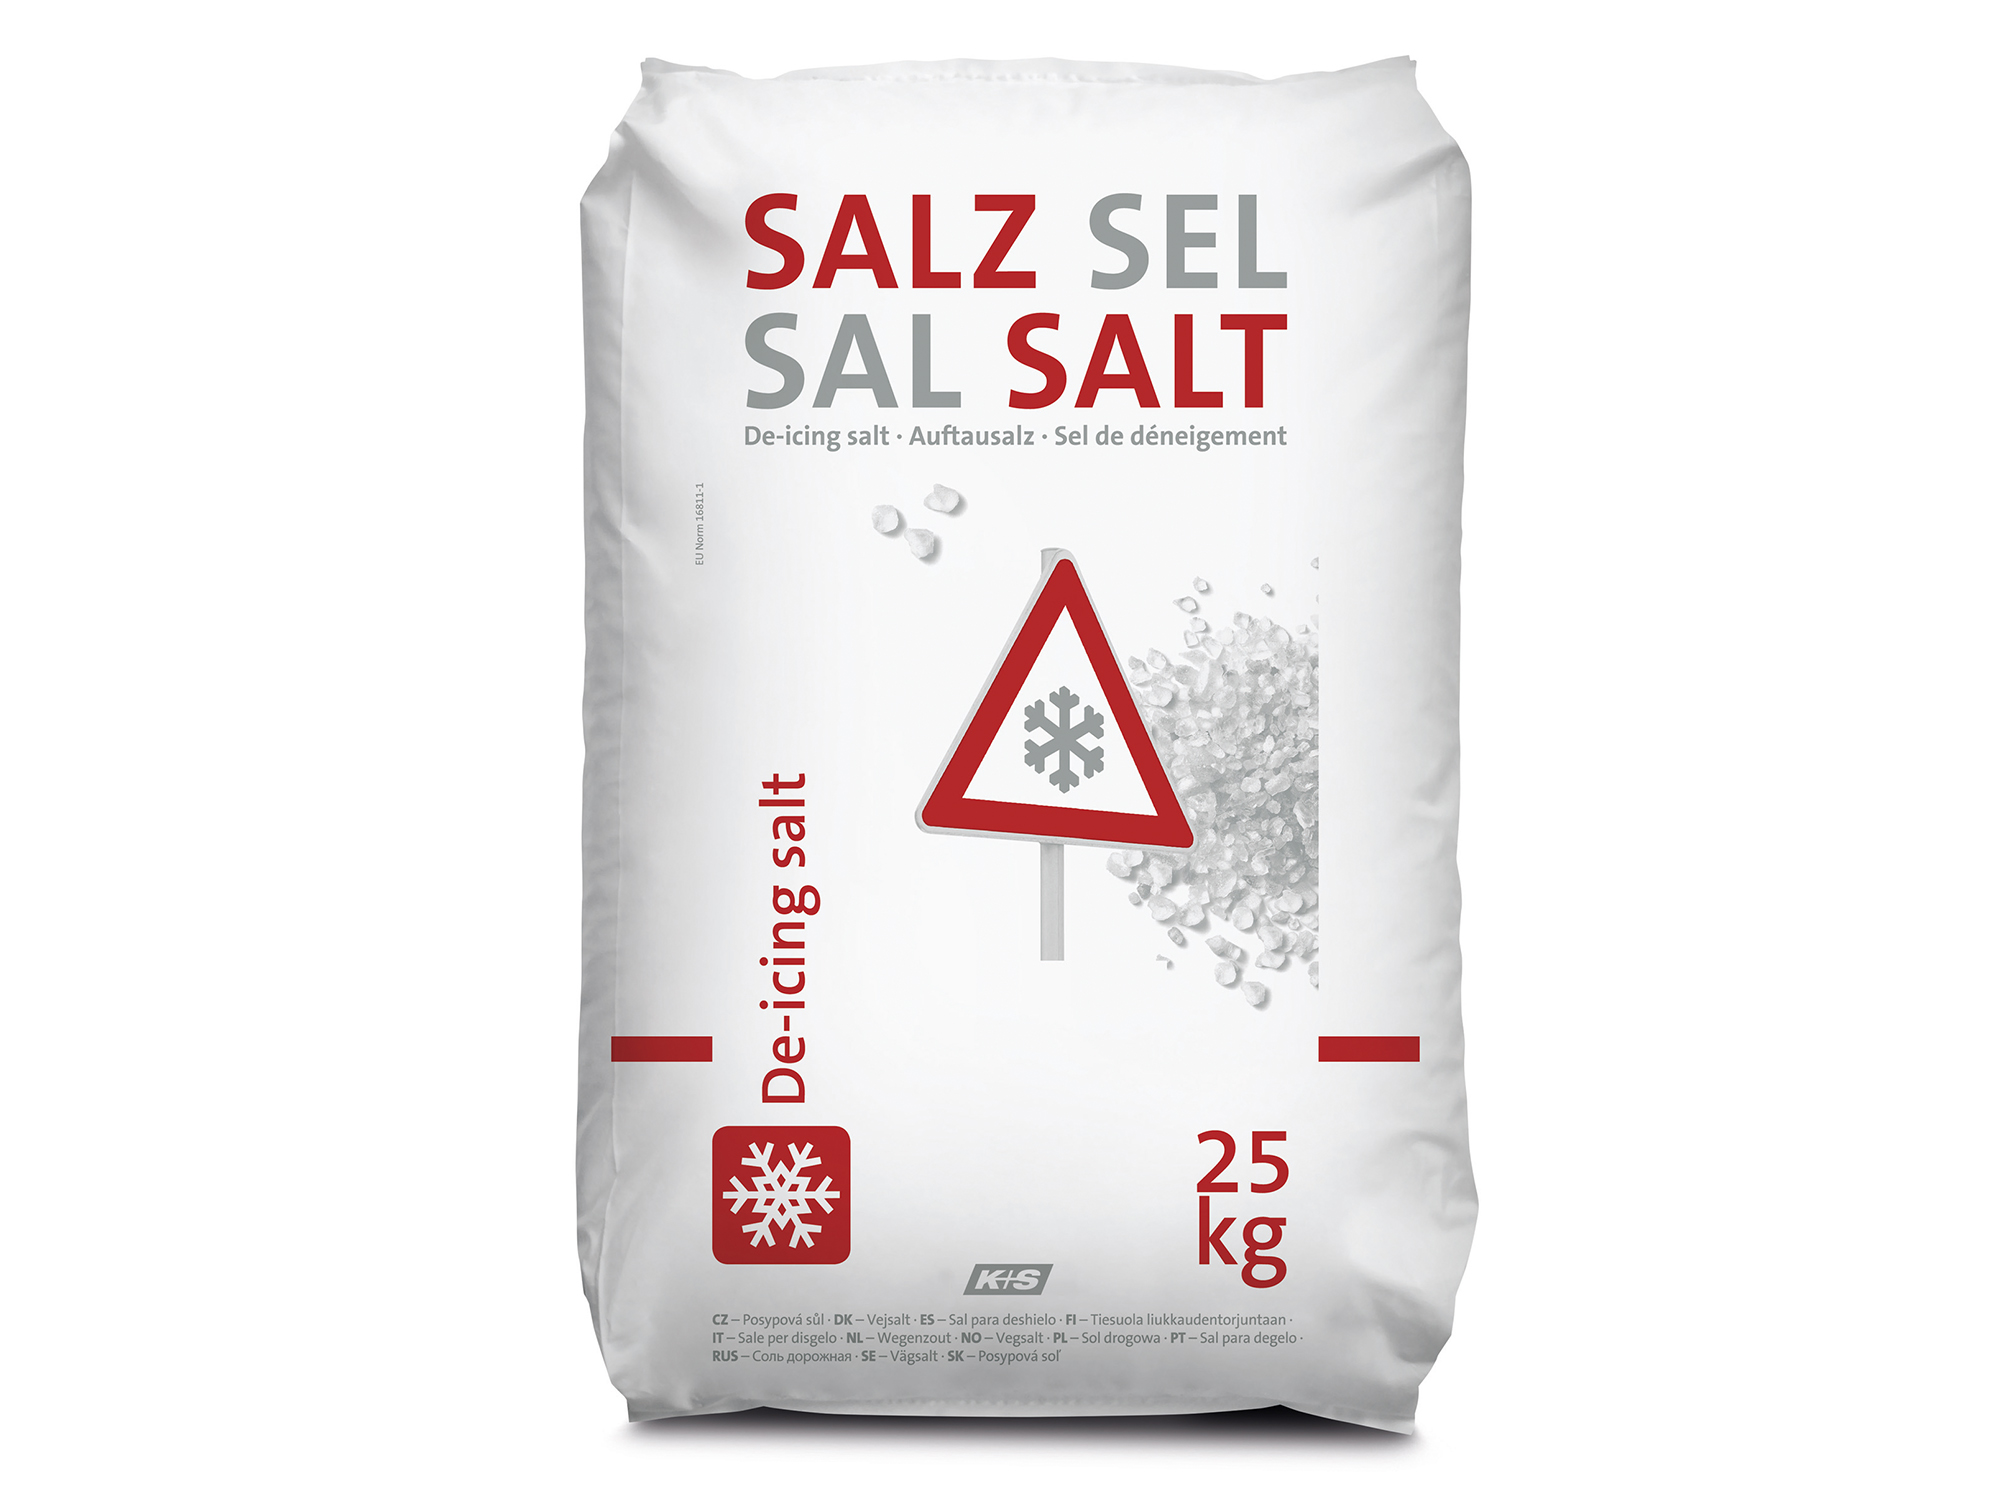 De-icing salt 25kg bag (4:3)